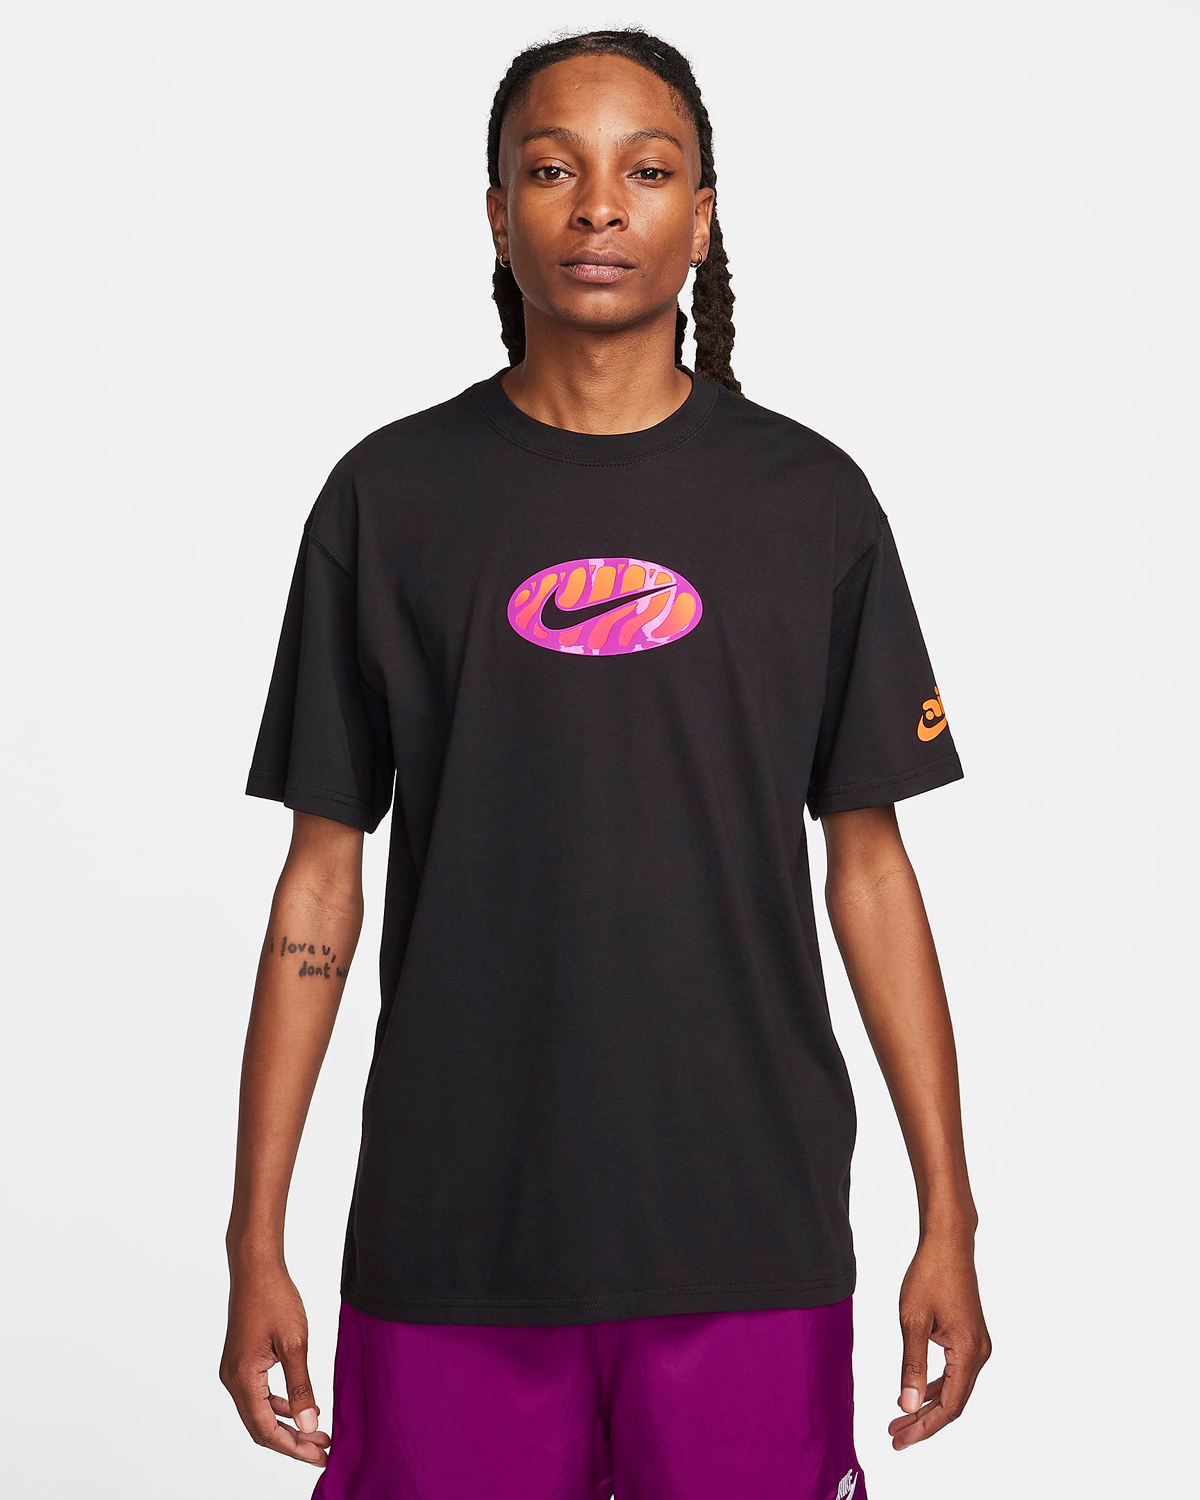 Nike-Air-Max-Plus-T-Shirt-Black-Purple-Orange-1